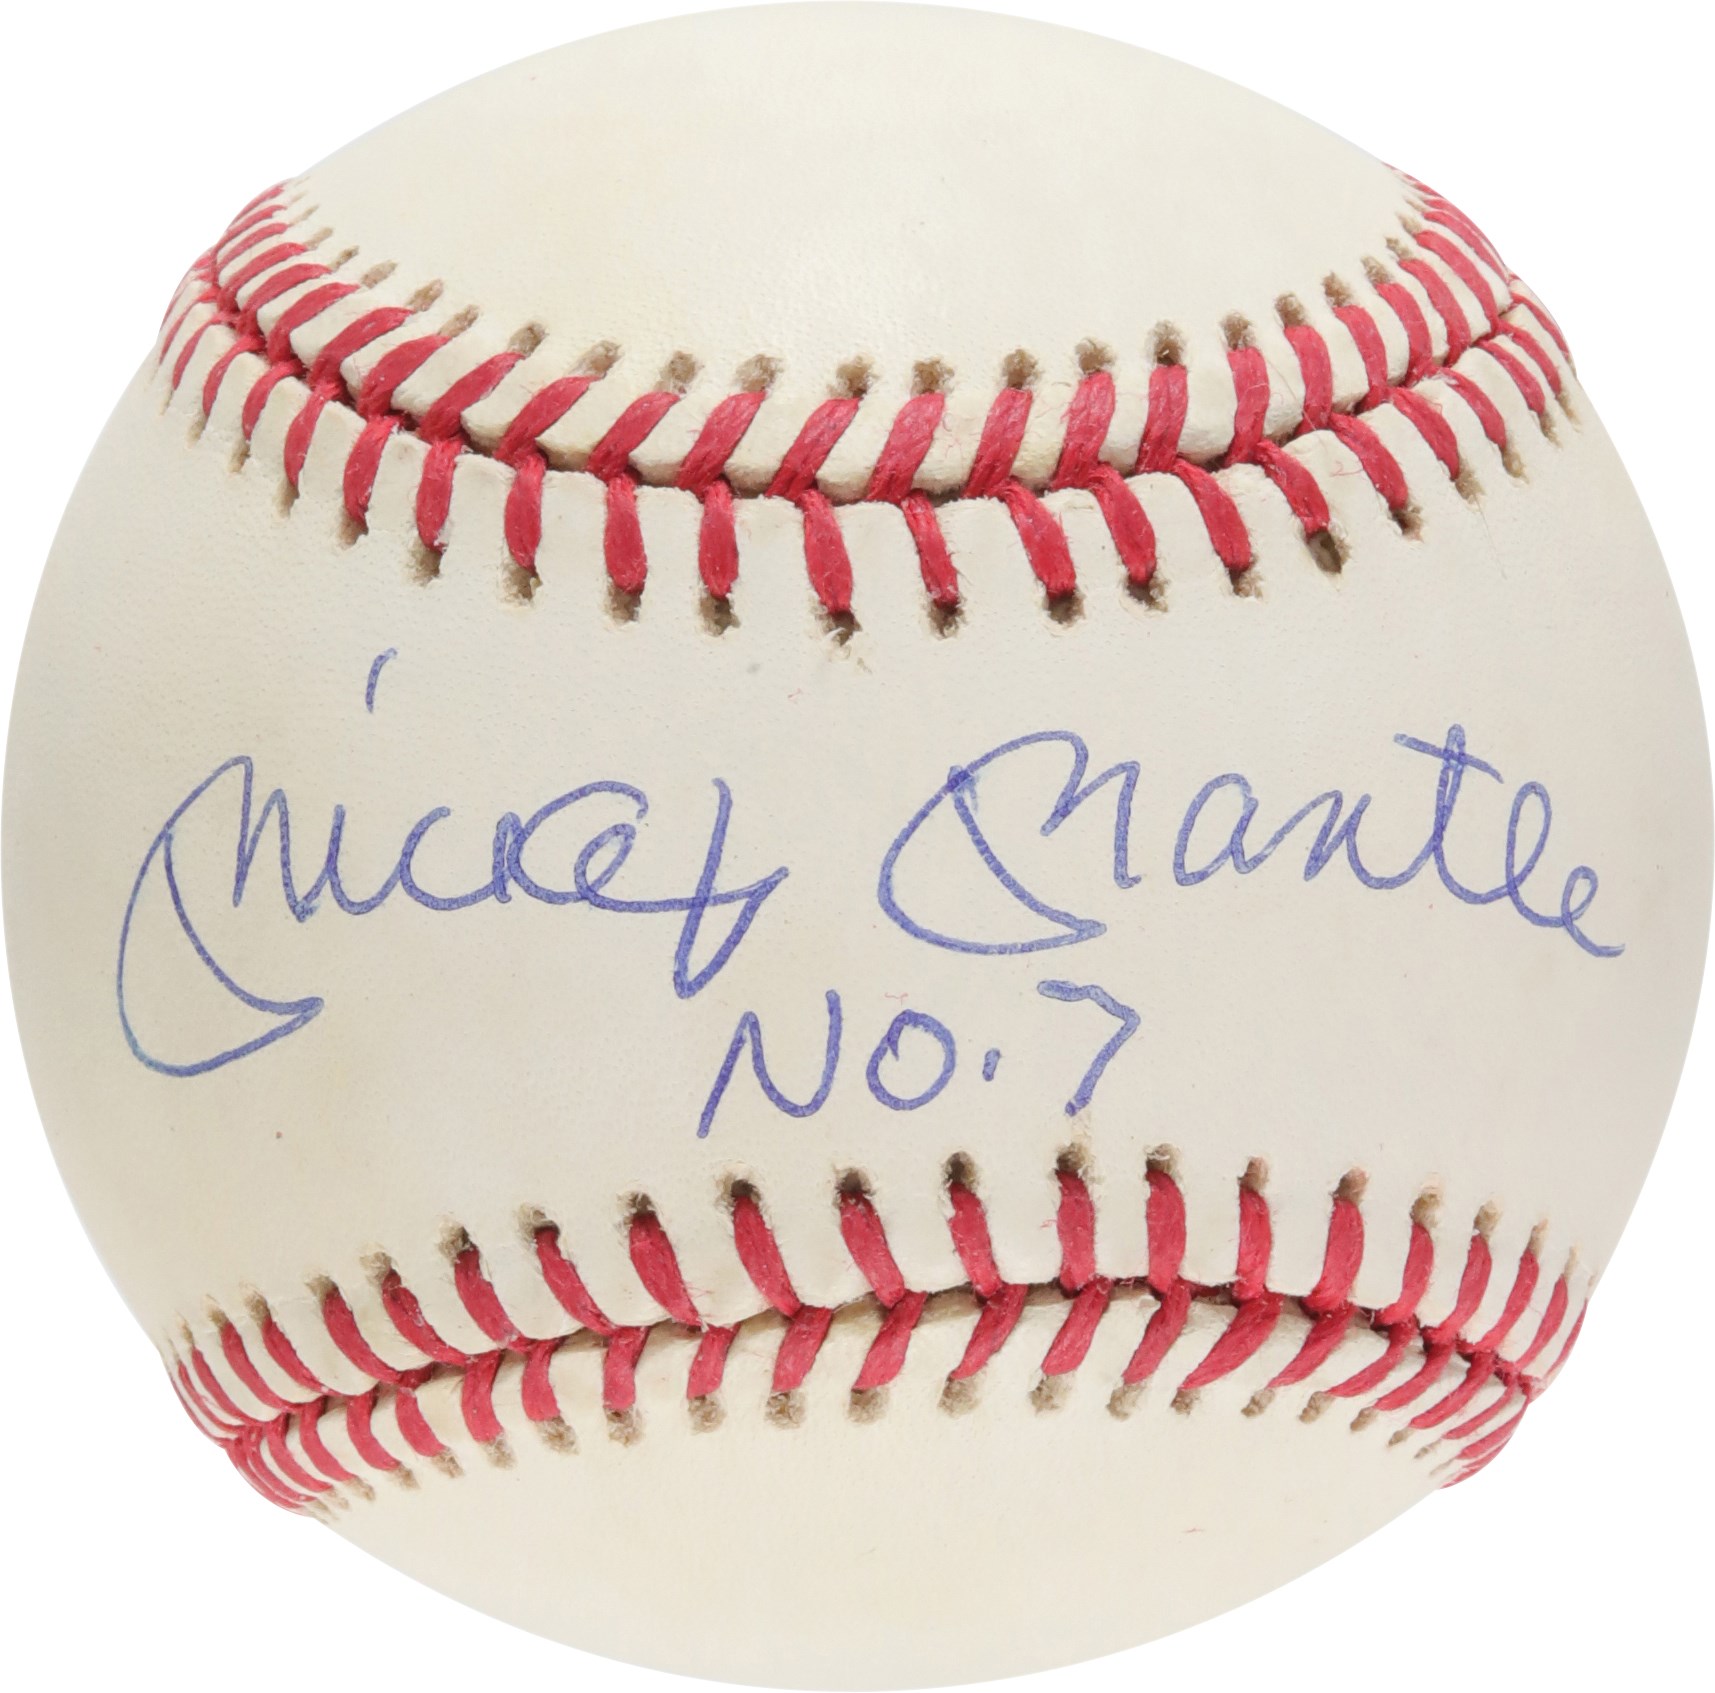 - Mickey Mantle "No. 7" Single-Signed Baseball (PSA MINT 9 Signature)